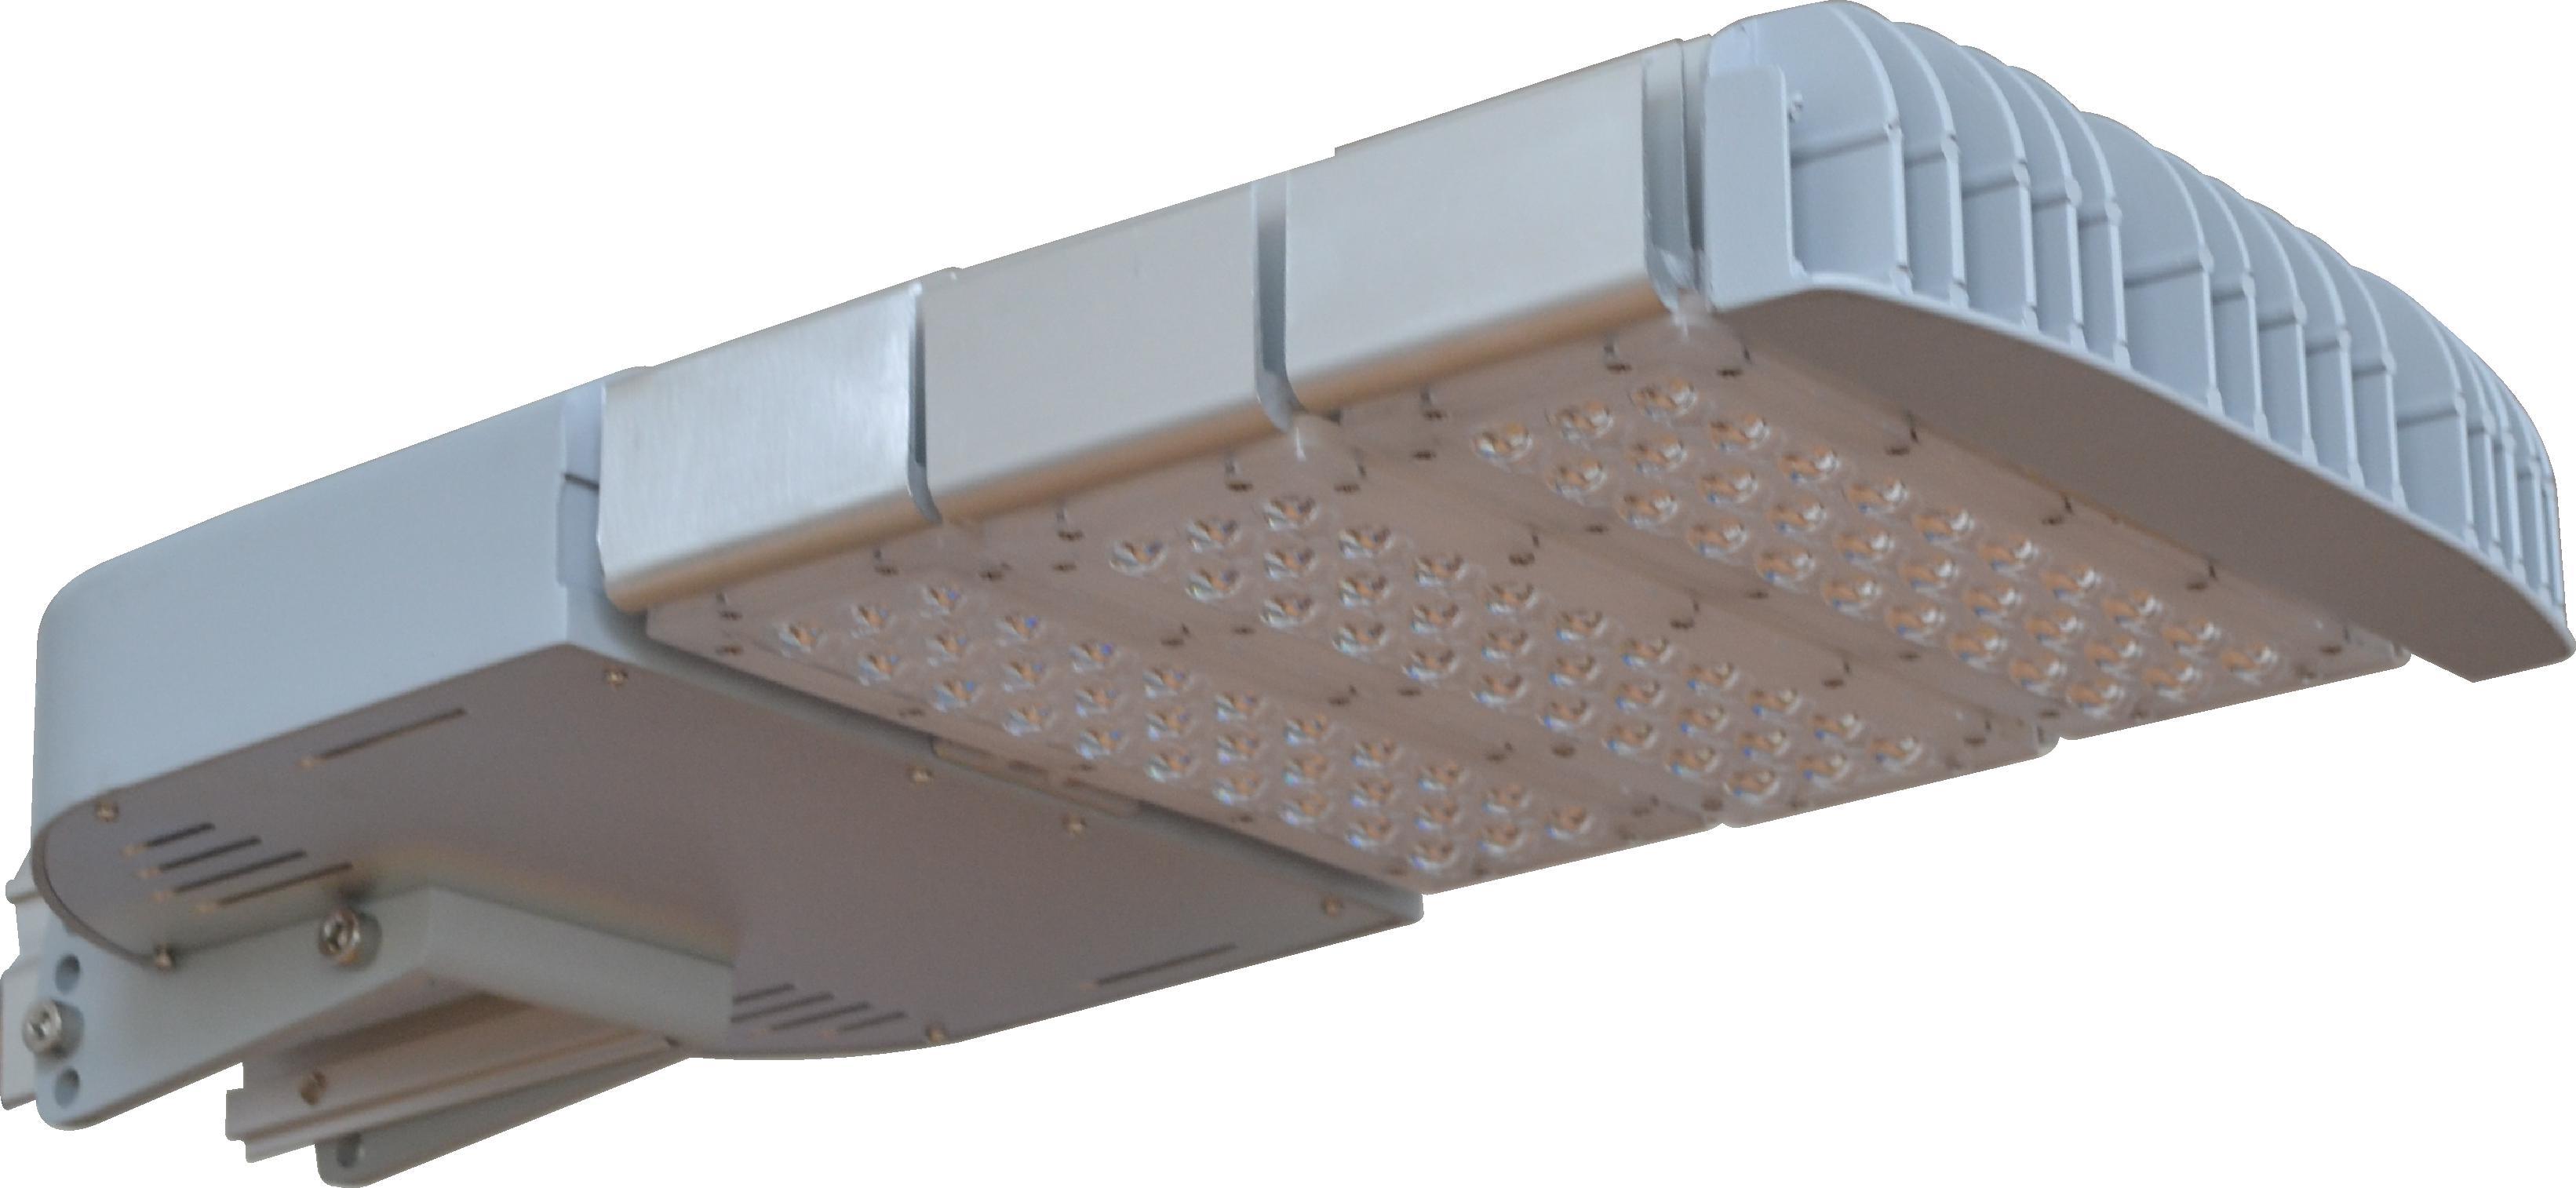 90W High Lumen LED-SL006b Street Light